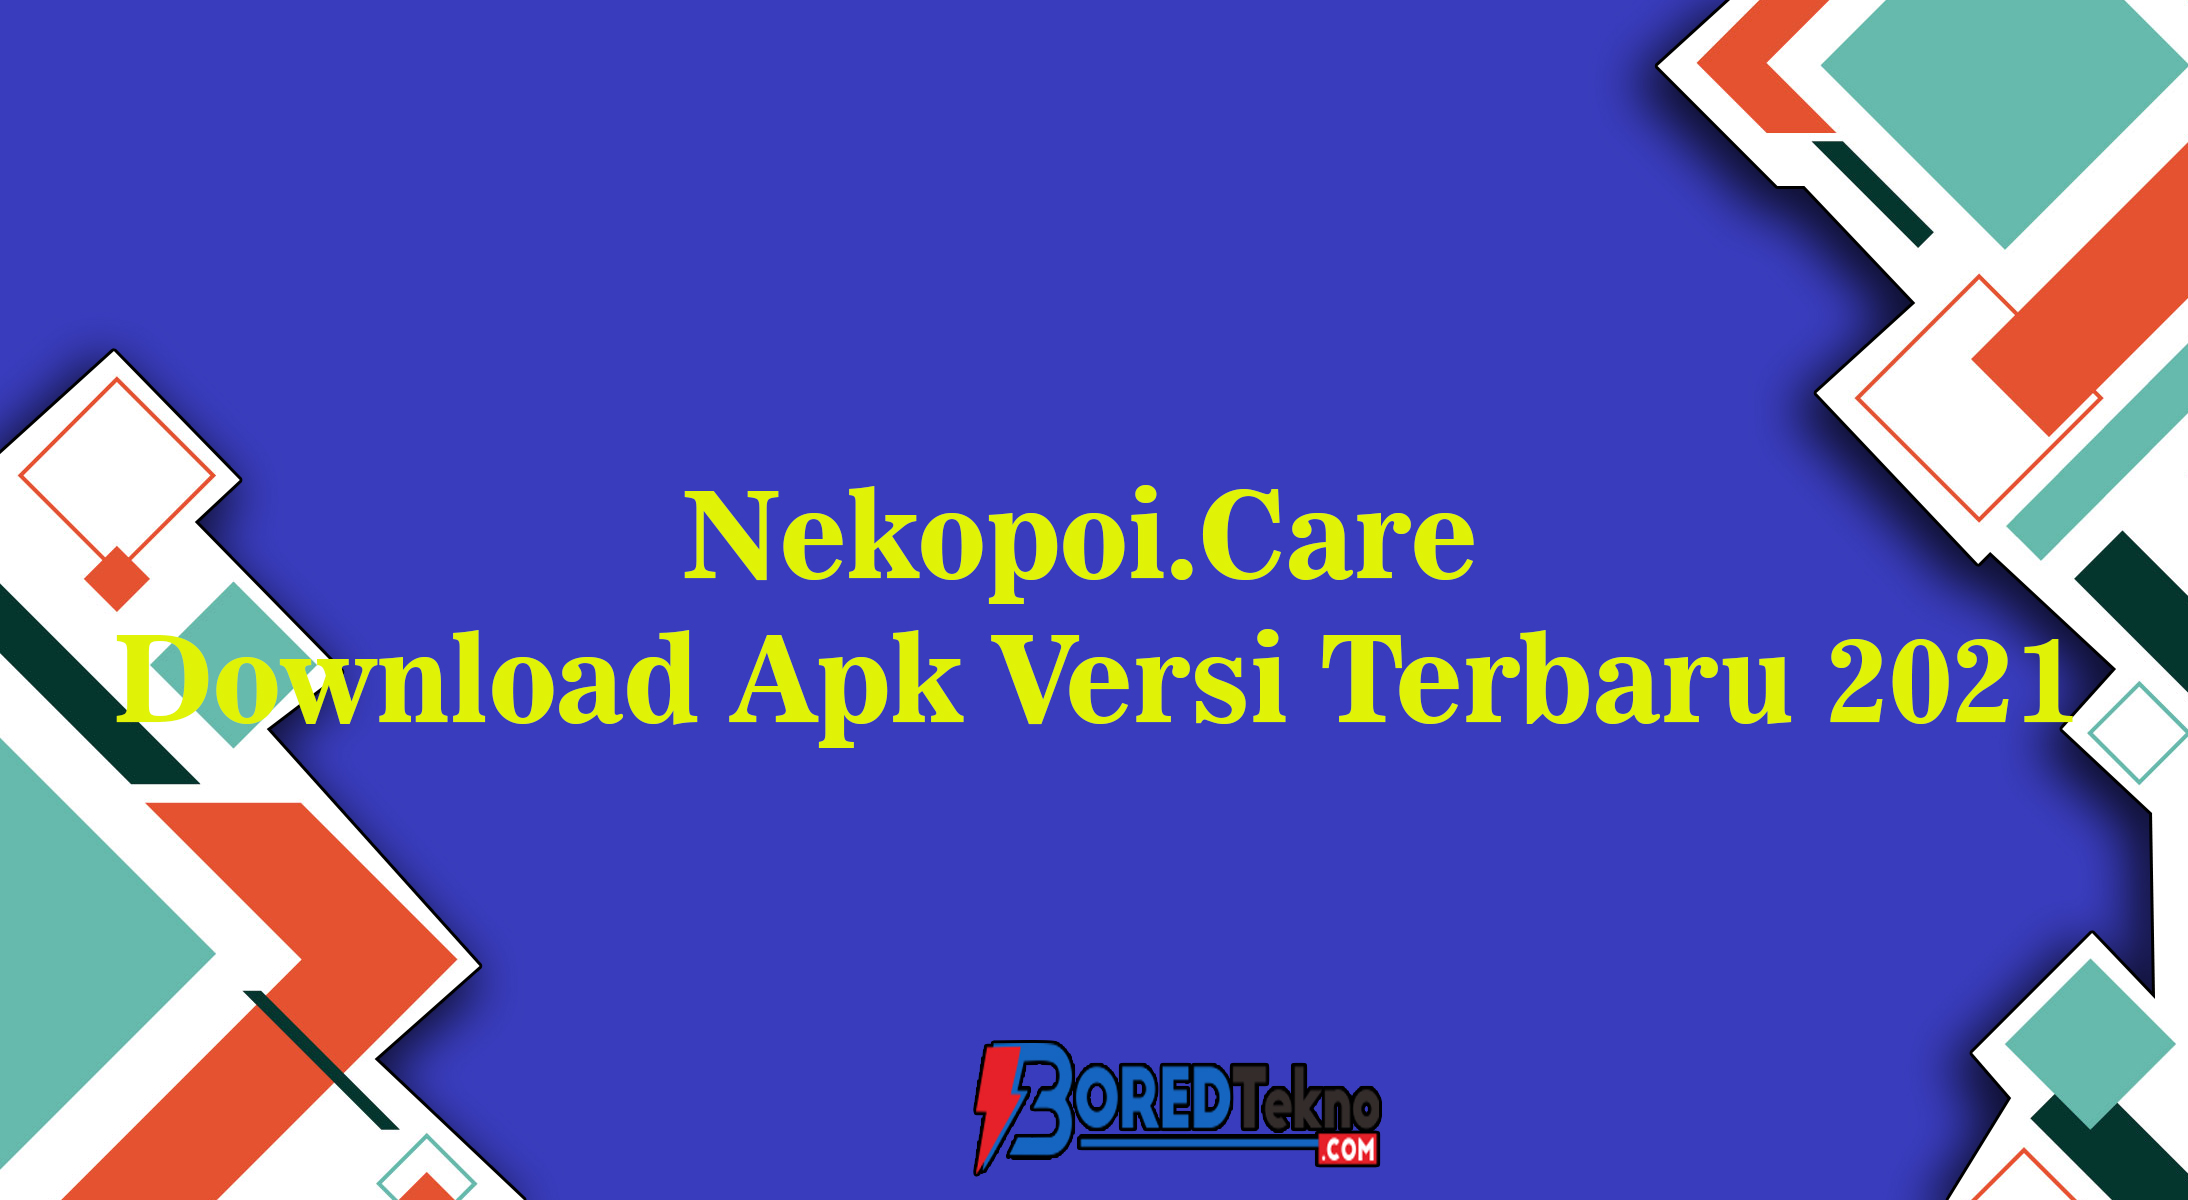 Nekopoi.care Download www.mallorytate.com